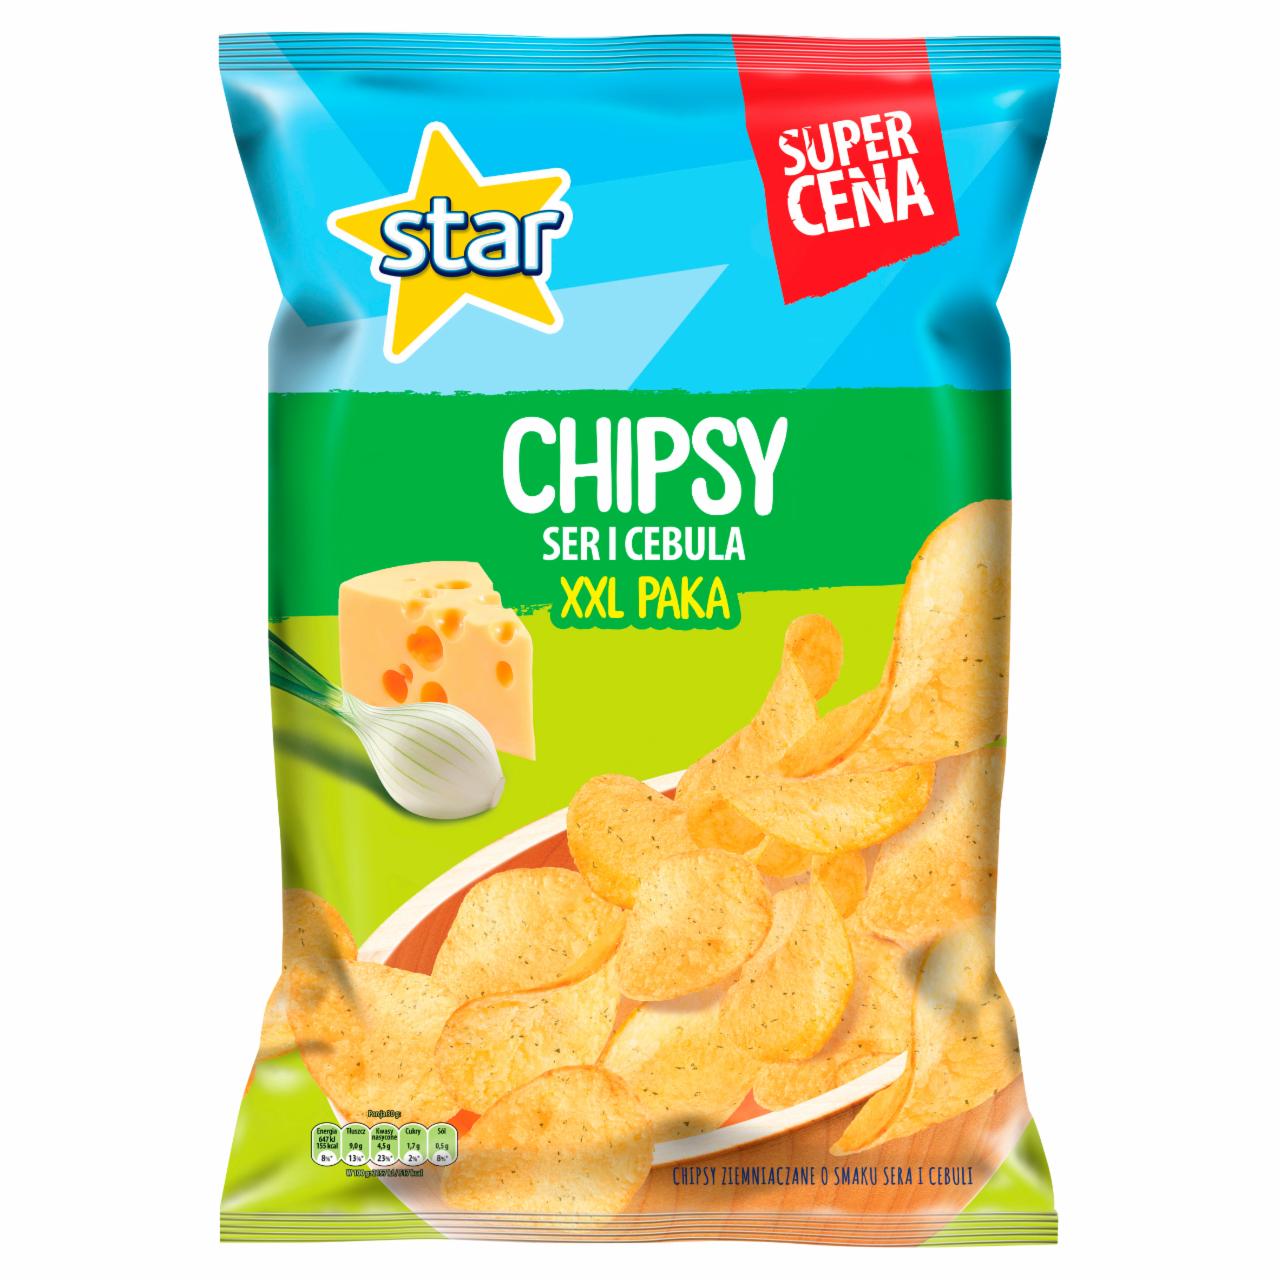 Zdjęcia - Star Chipsy ser i cebula 250 g